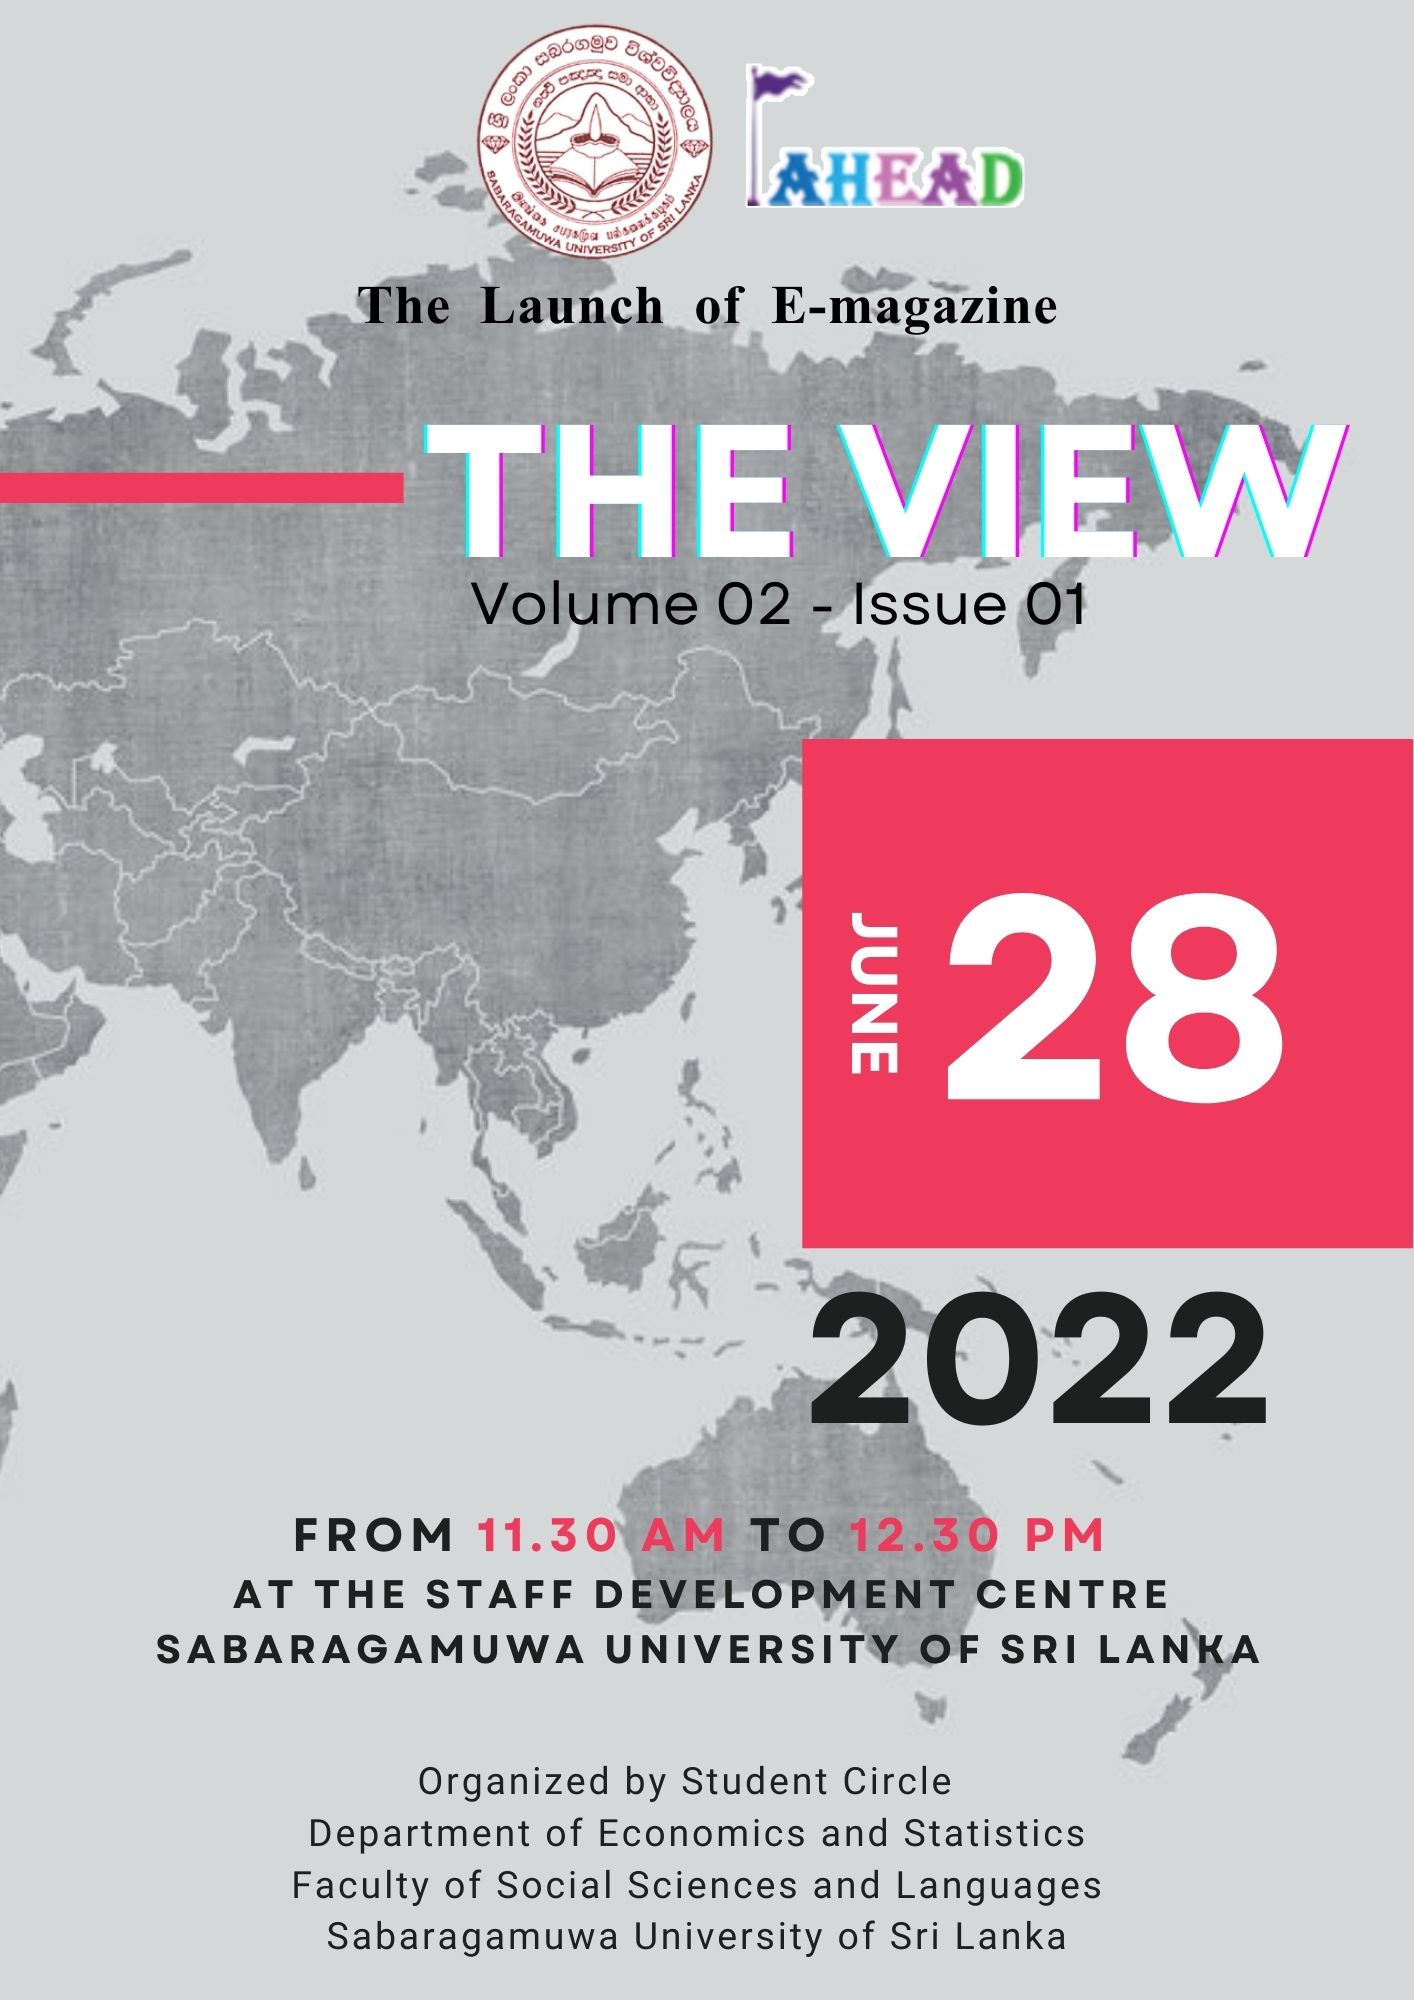 Launching the Student E-magazine (Volume: 02 Issue 01)